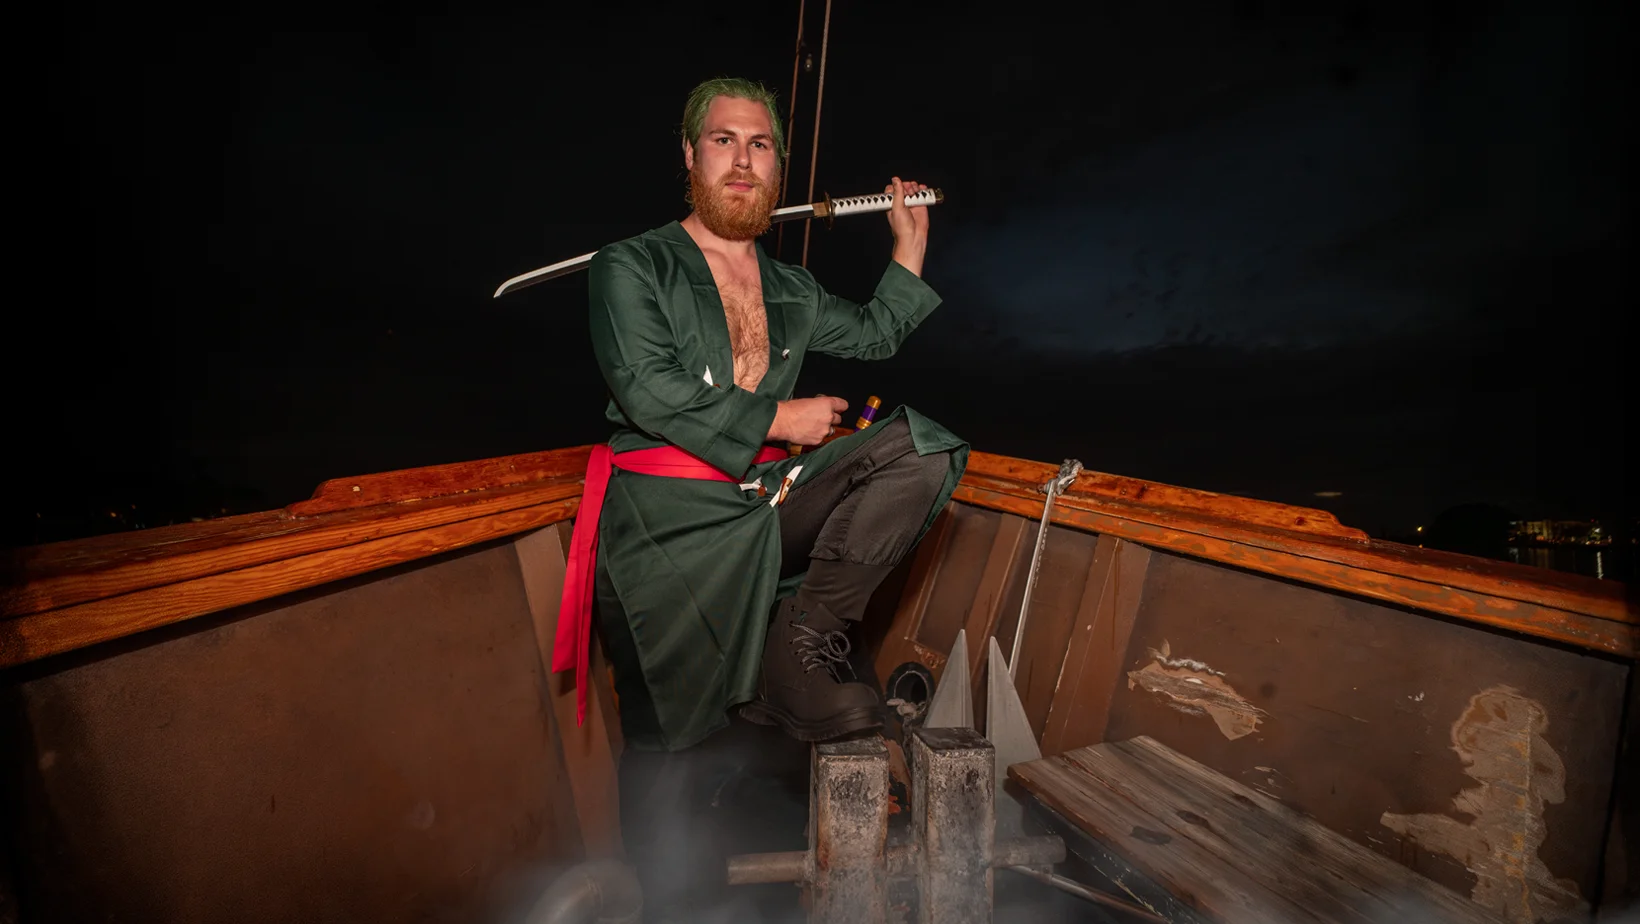 Male Green Pirate Costume